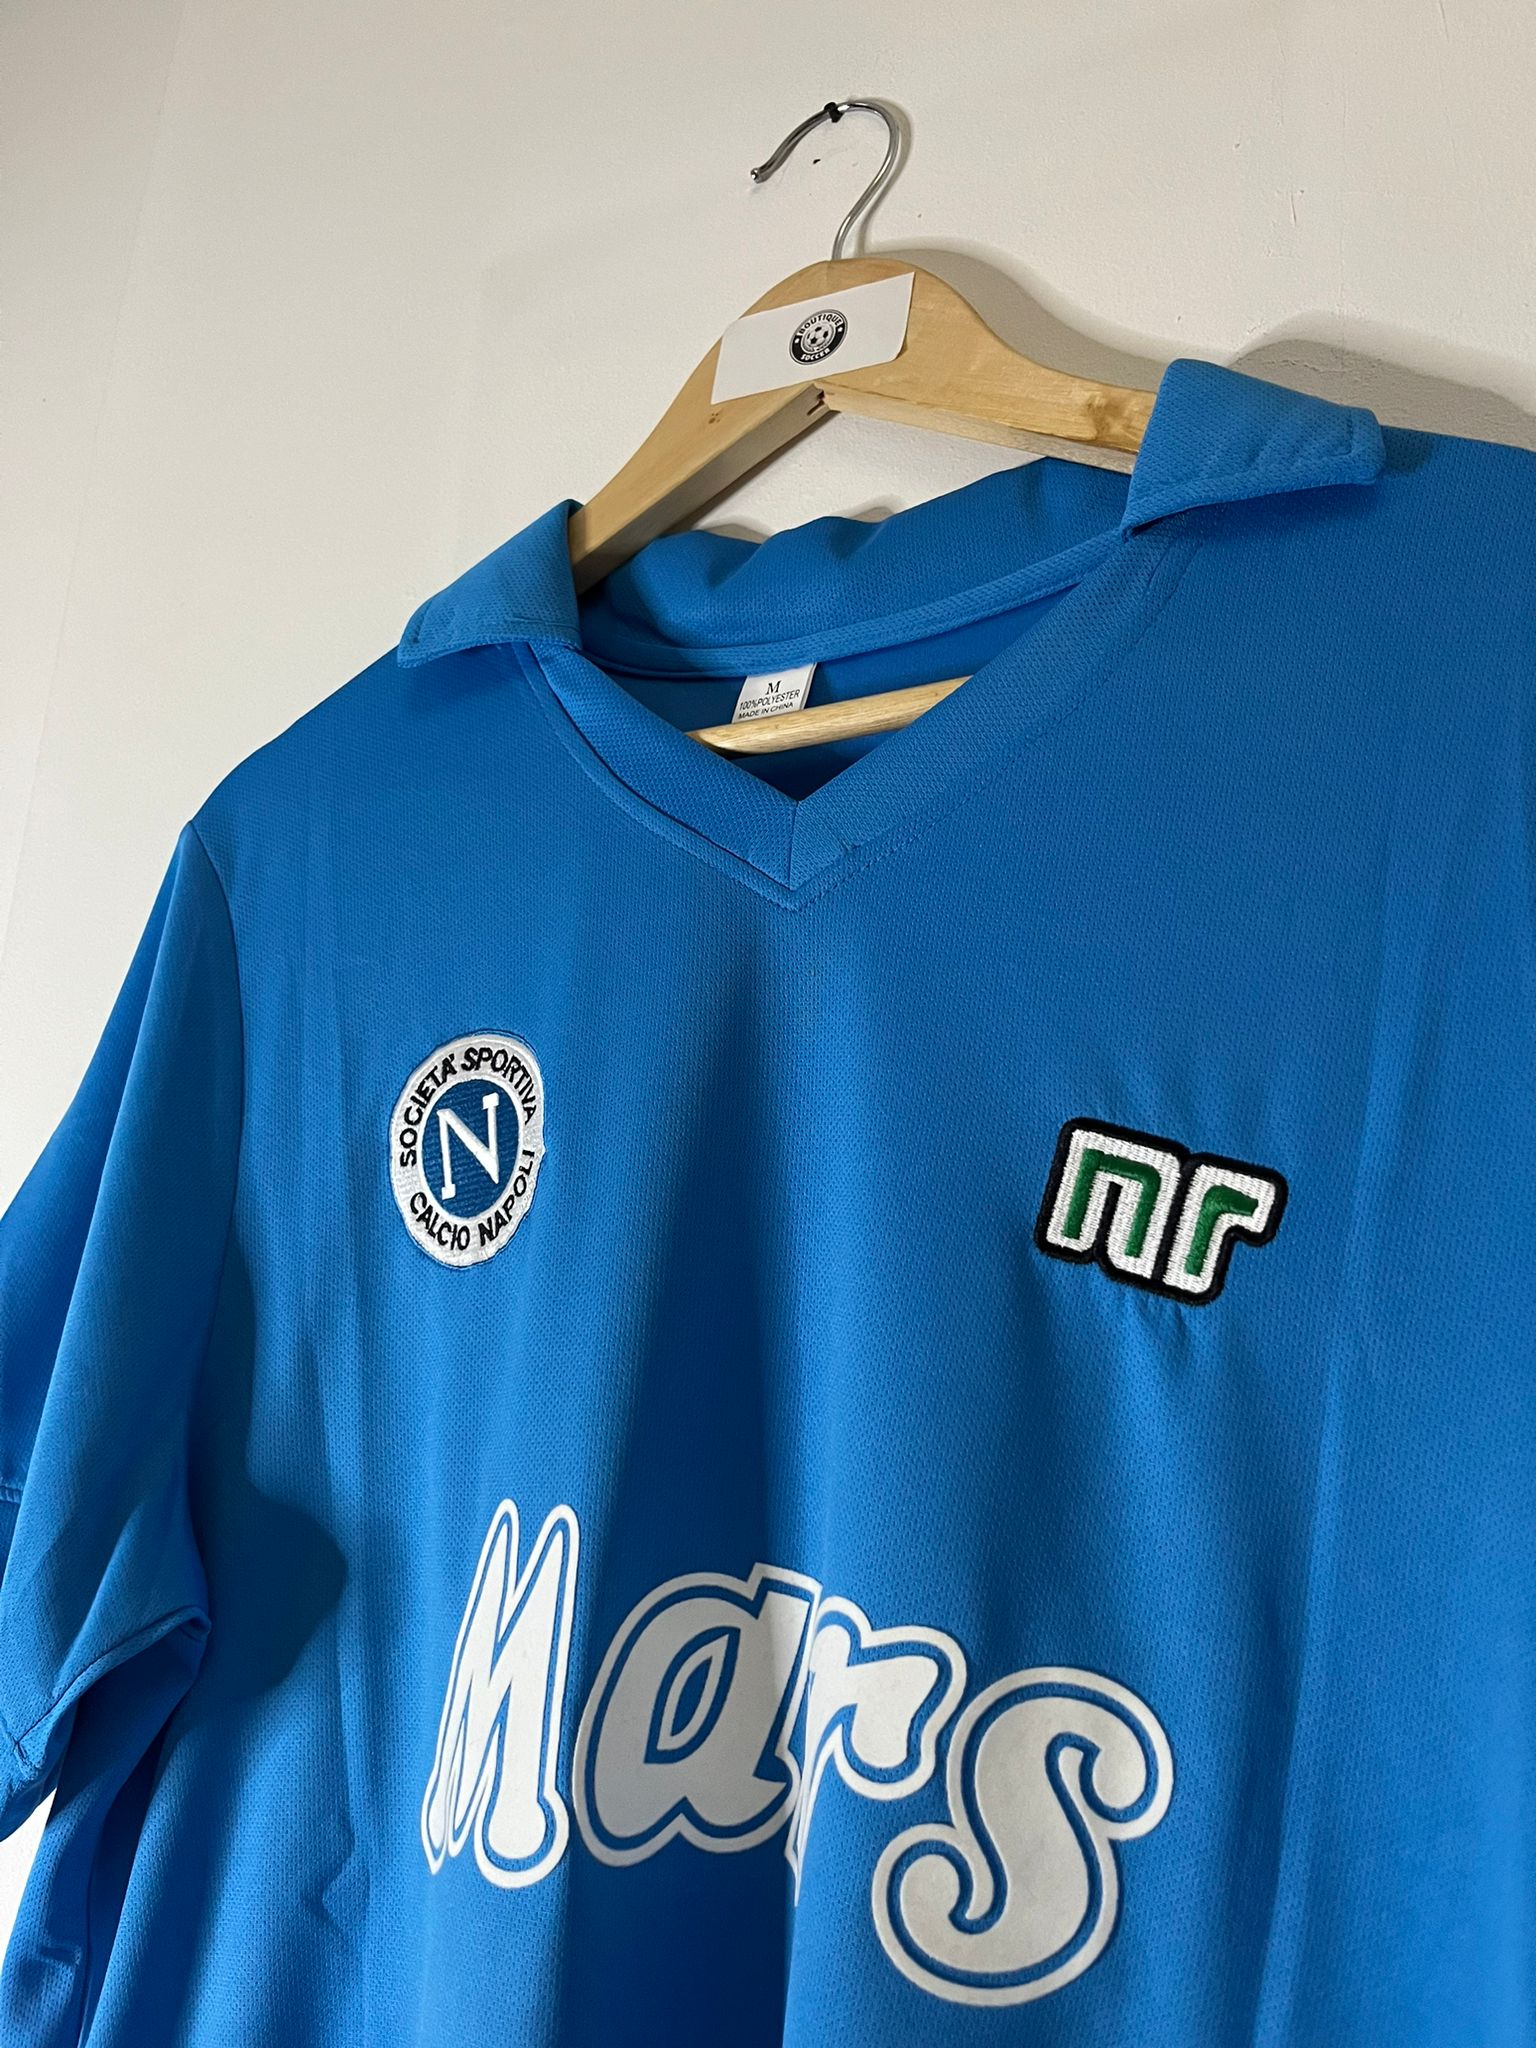 Napoli Maradona Shirt